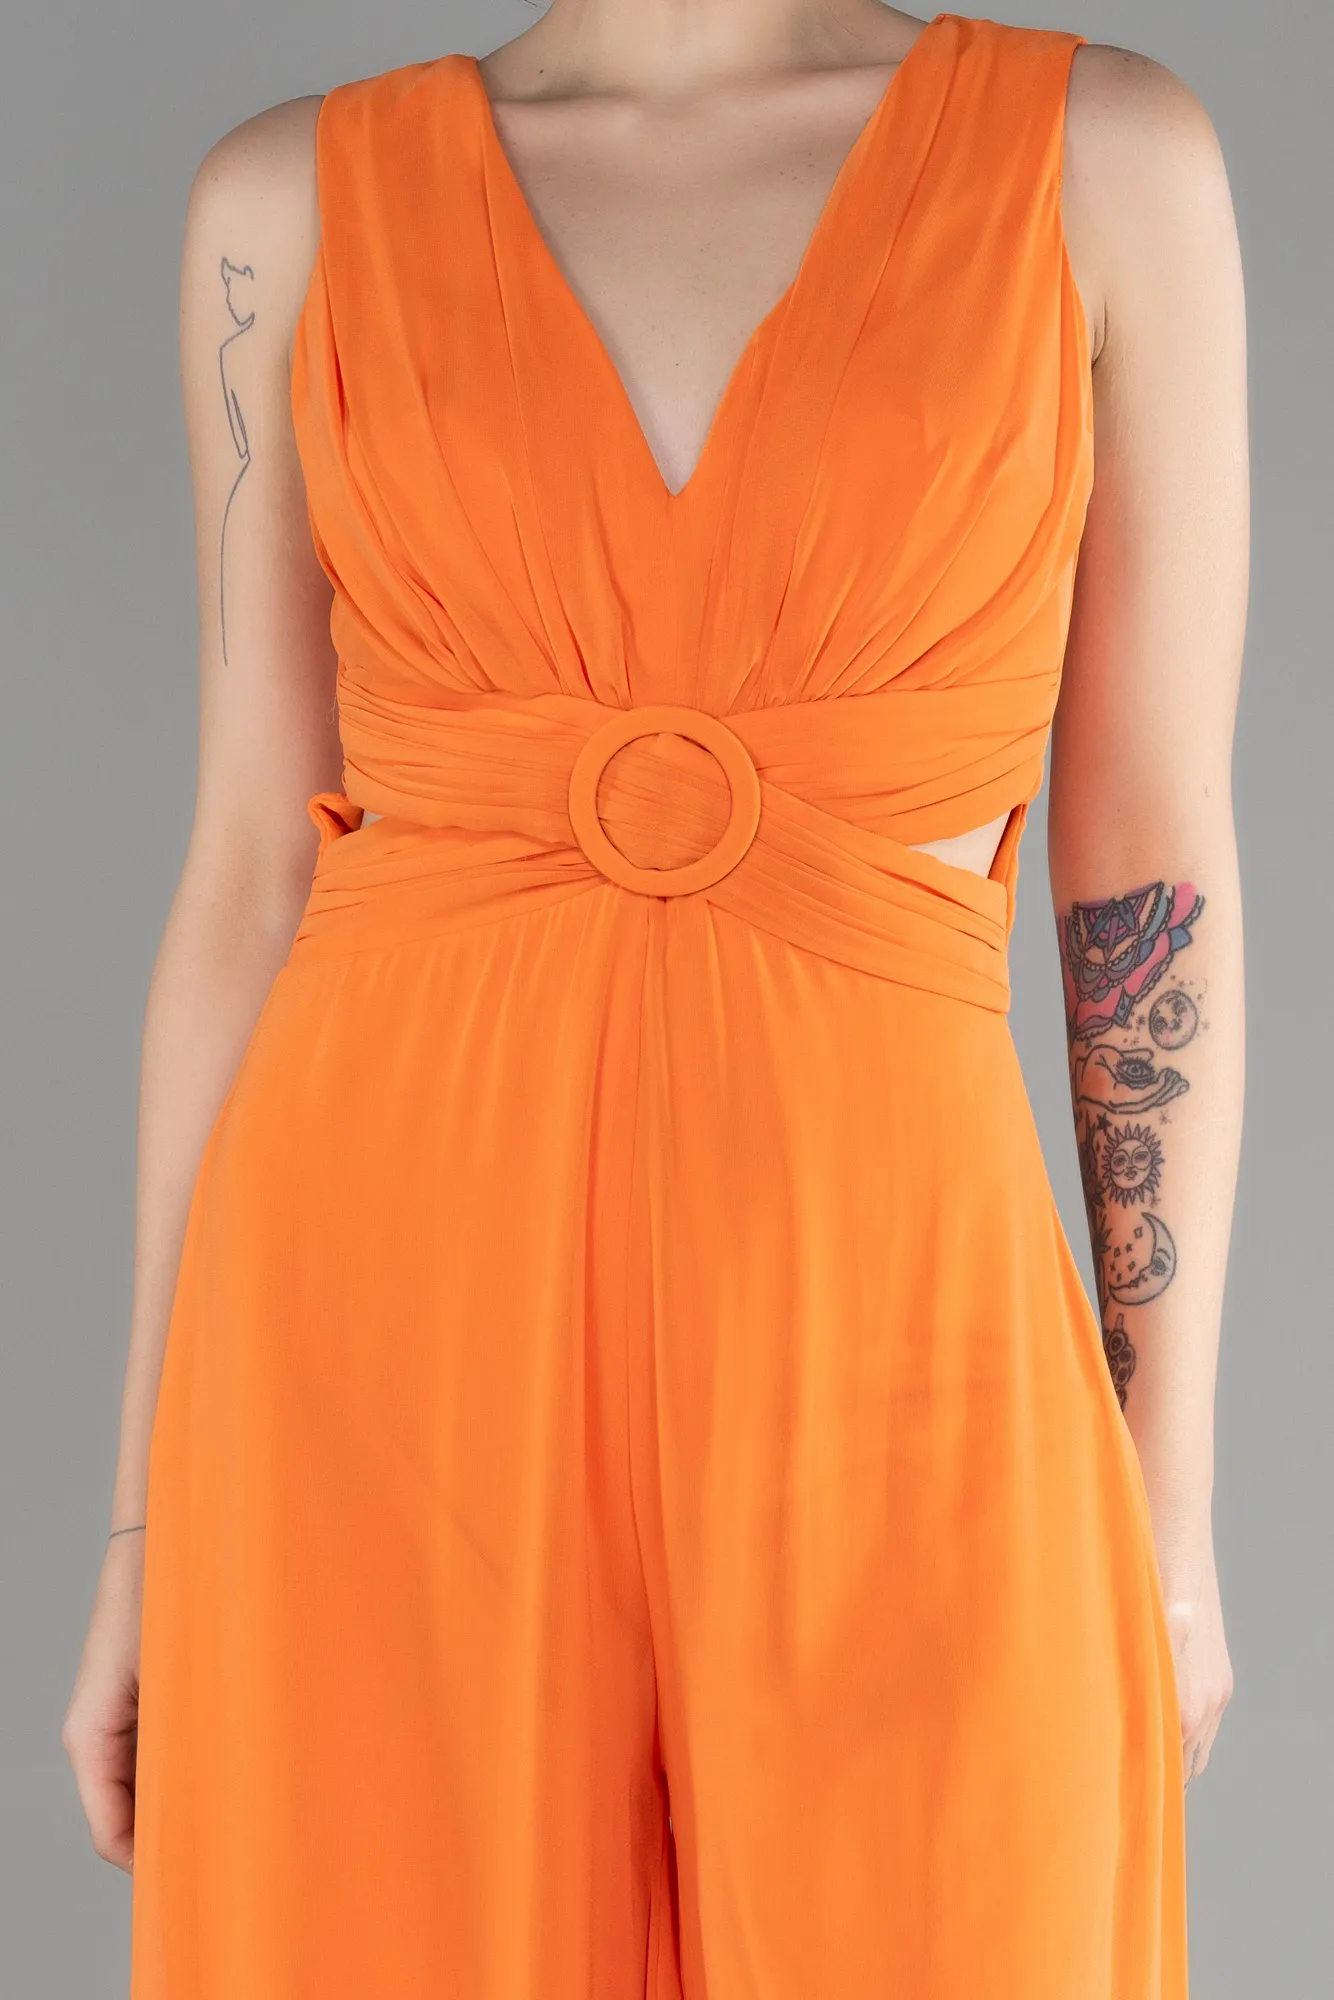 Orange-Chiffon Invitation Dress ABT075